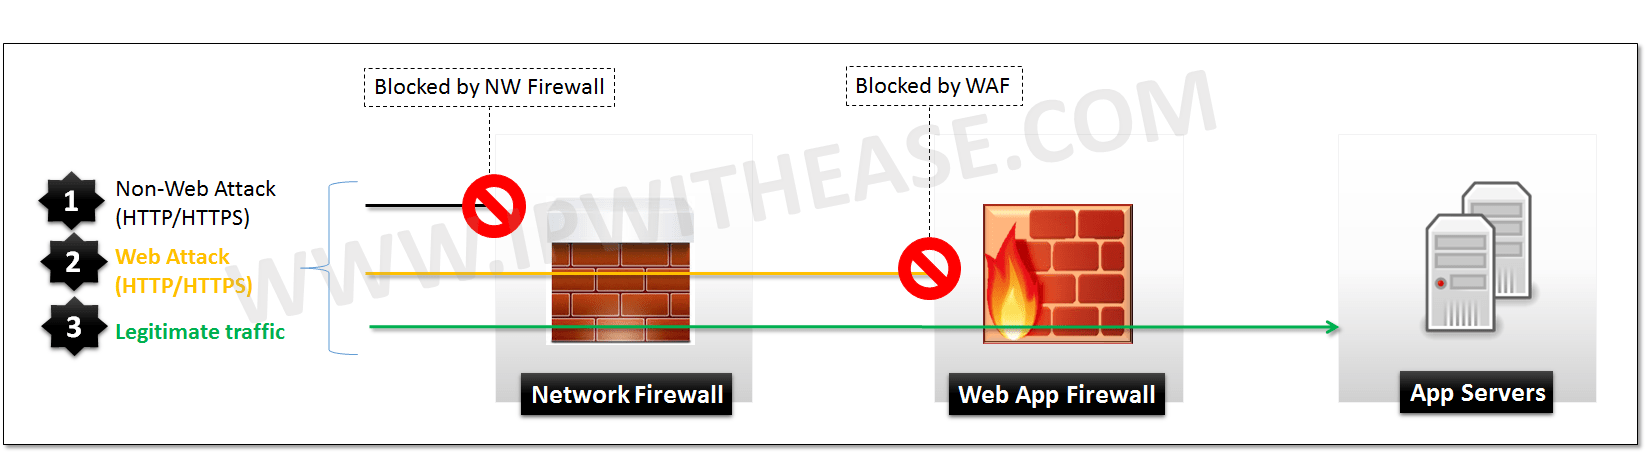 application firewall